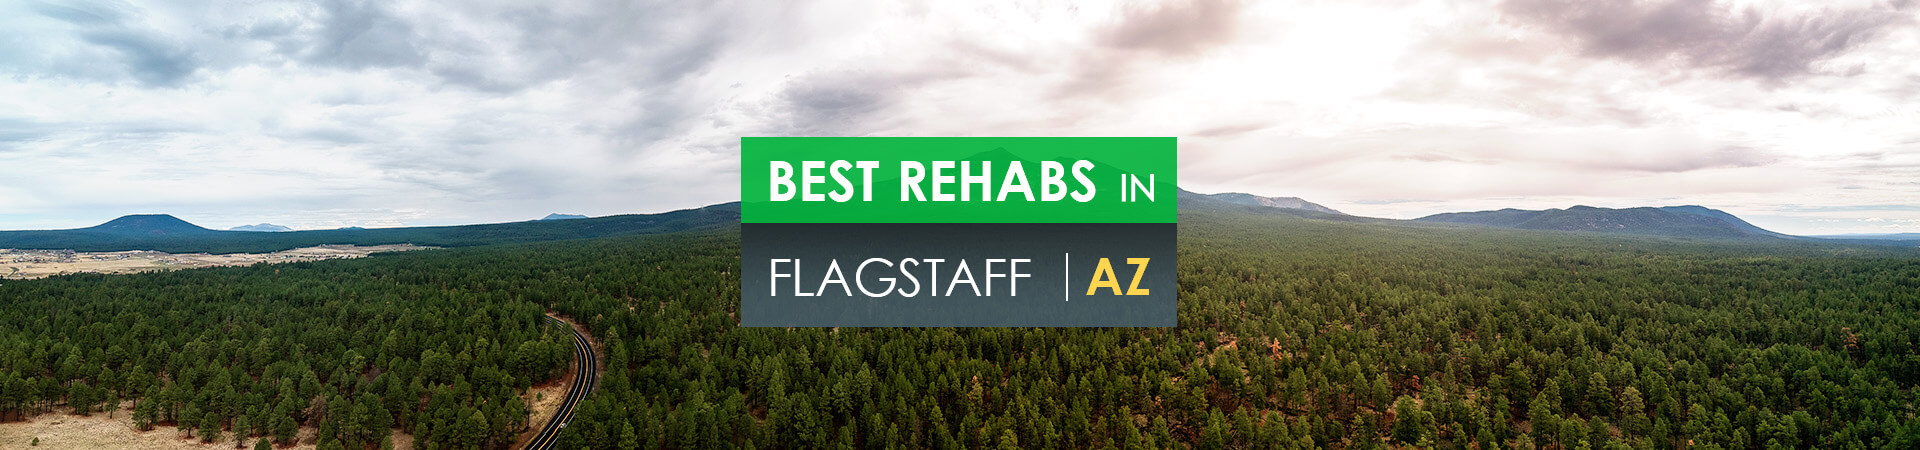 Best rehabs in Flagstaff, AZ